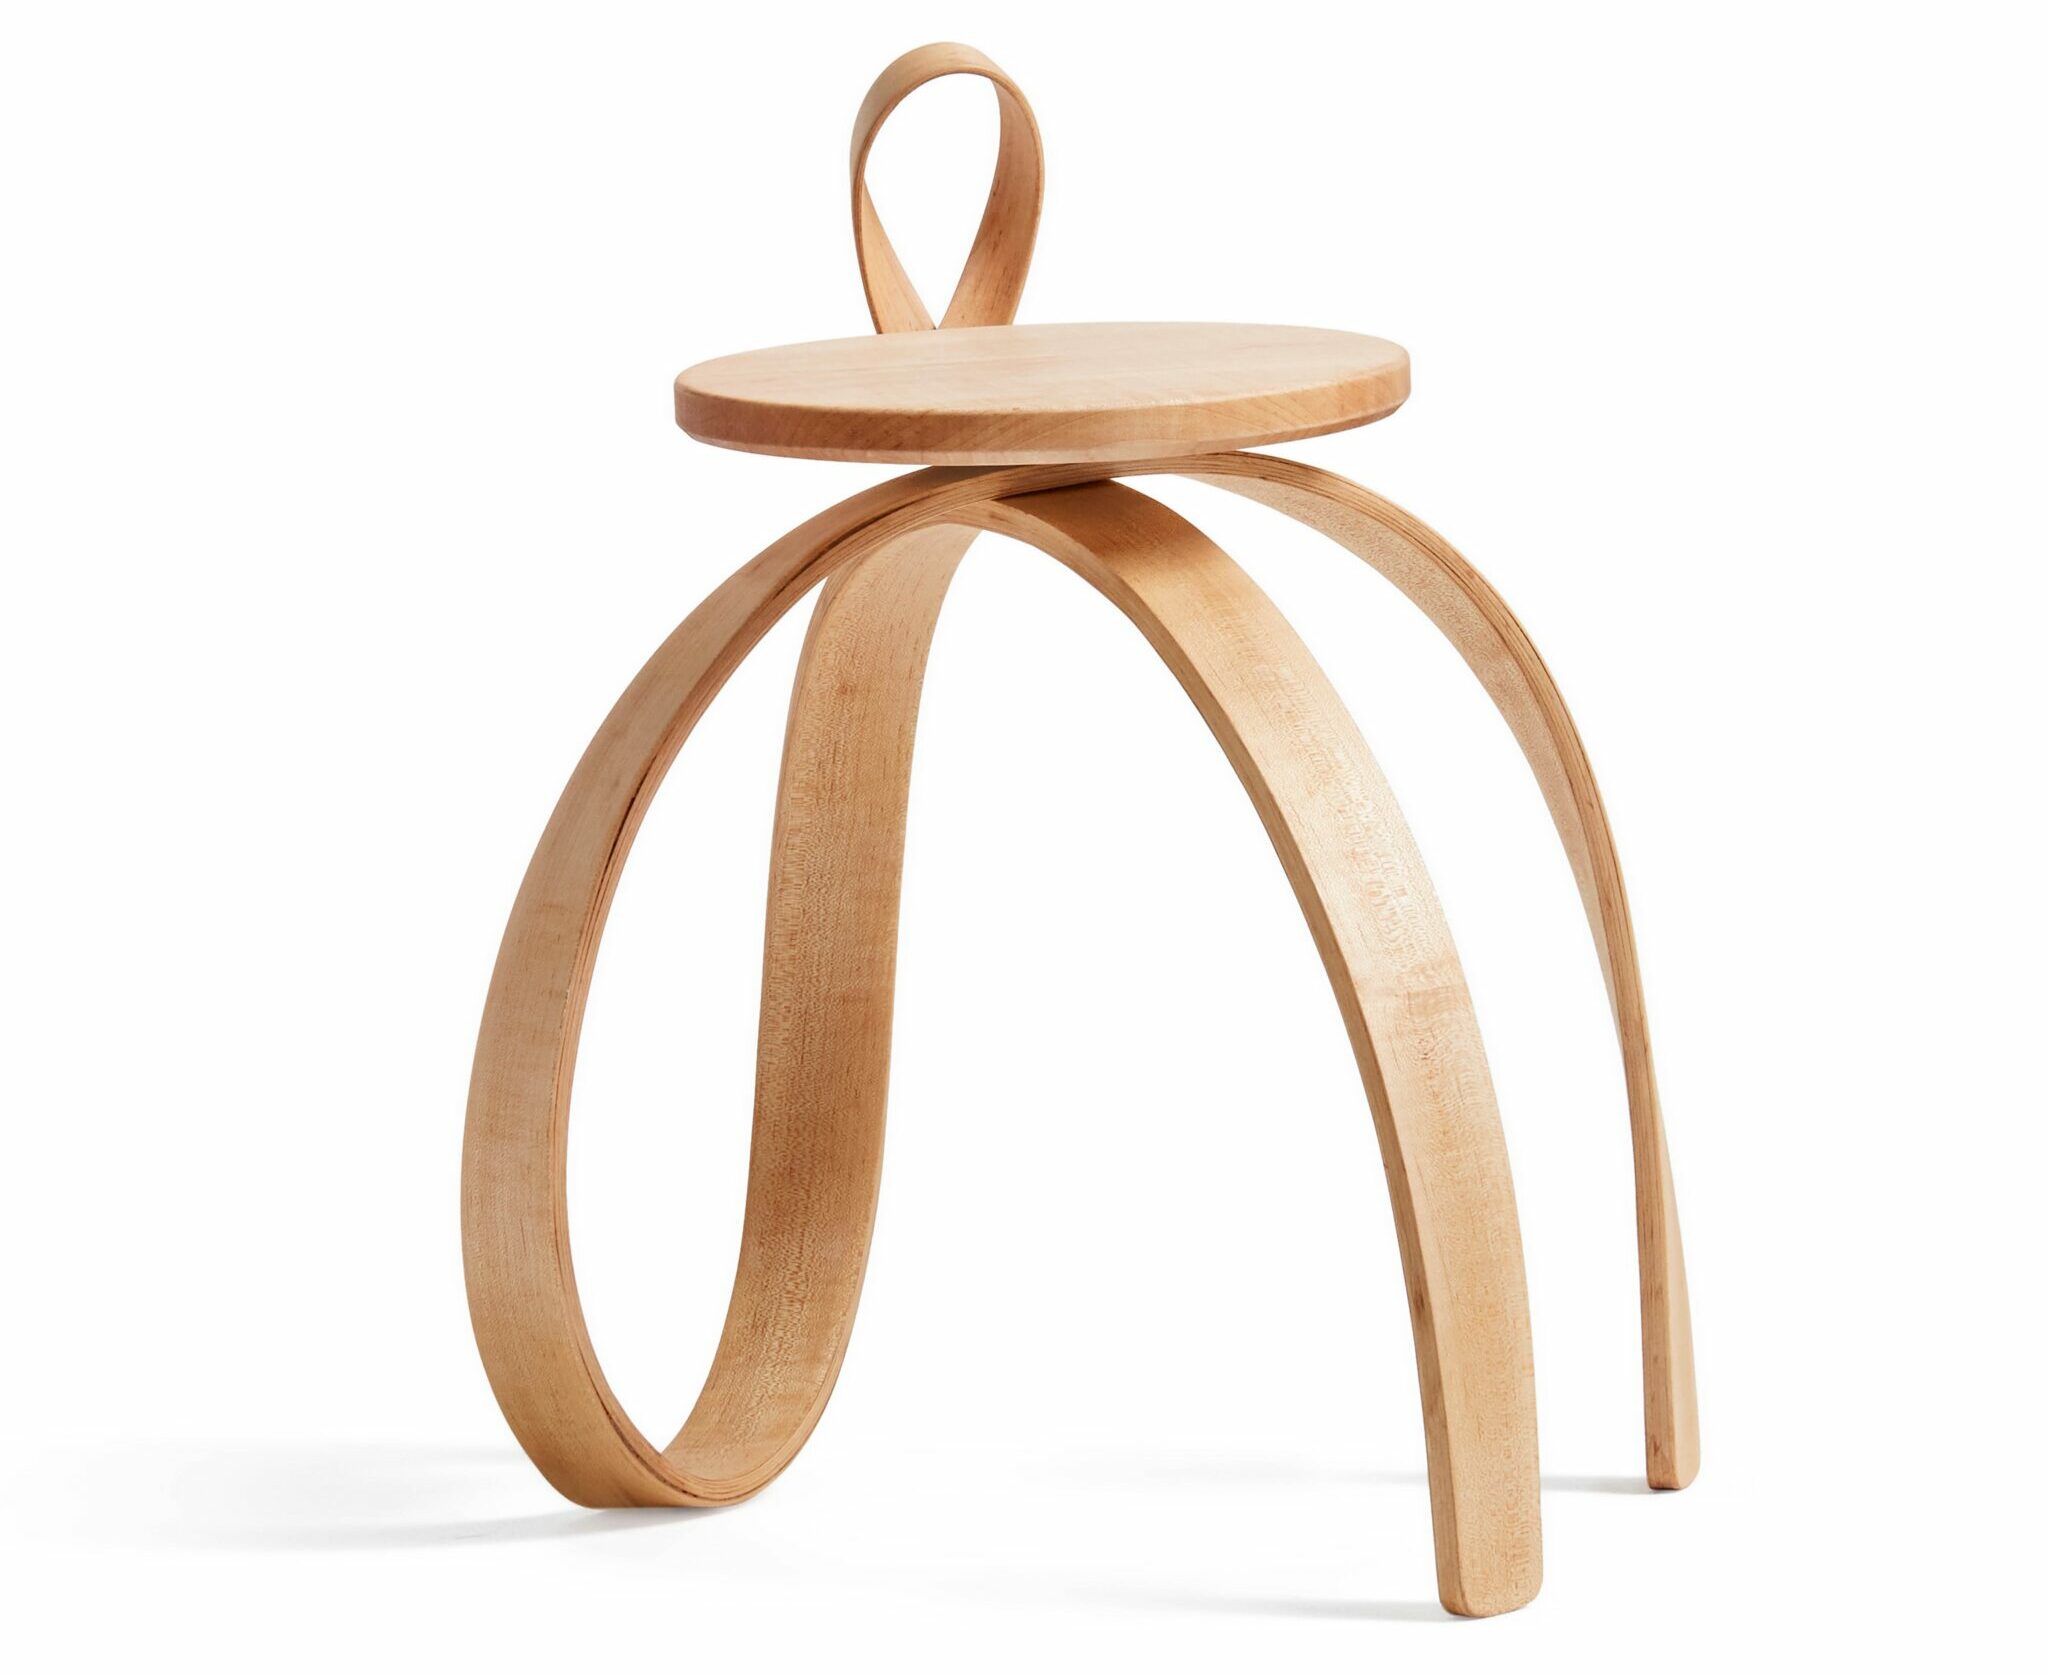 Wooden stool with twisty bending legs